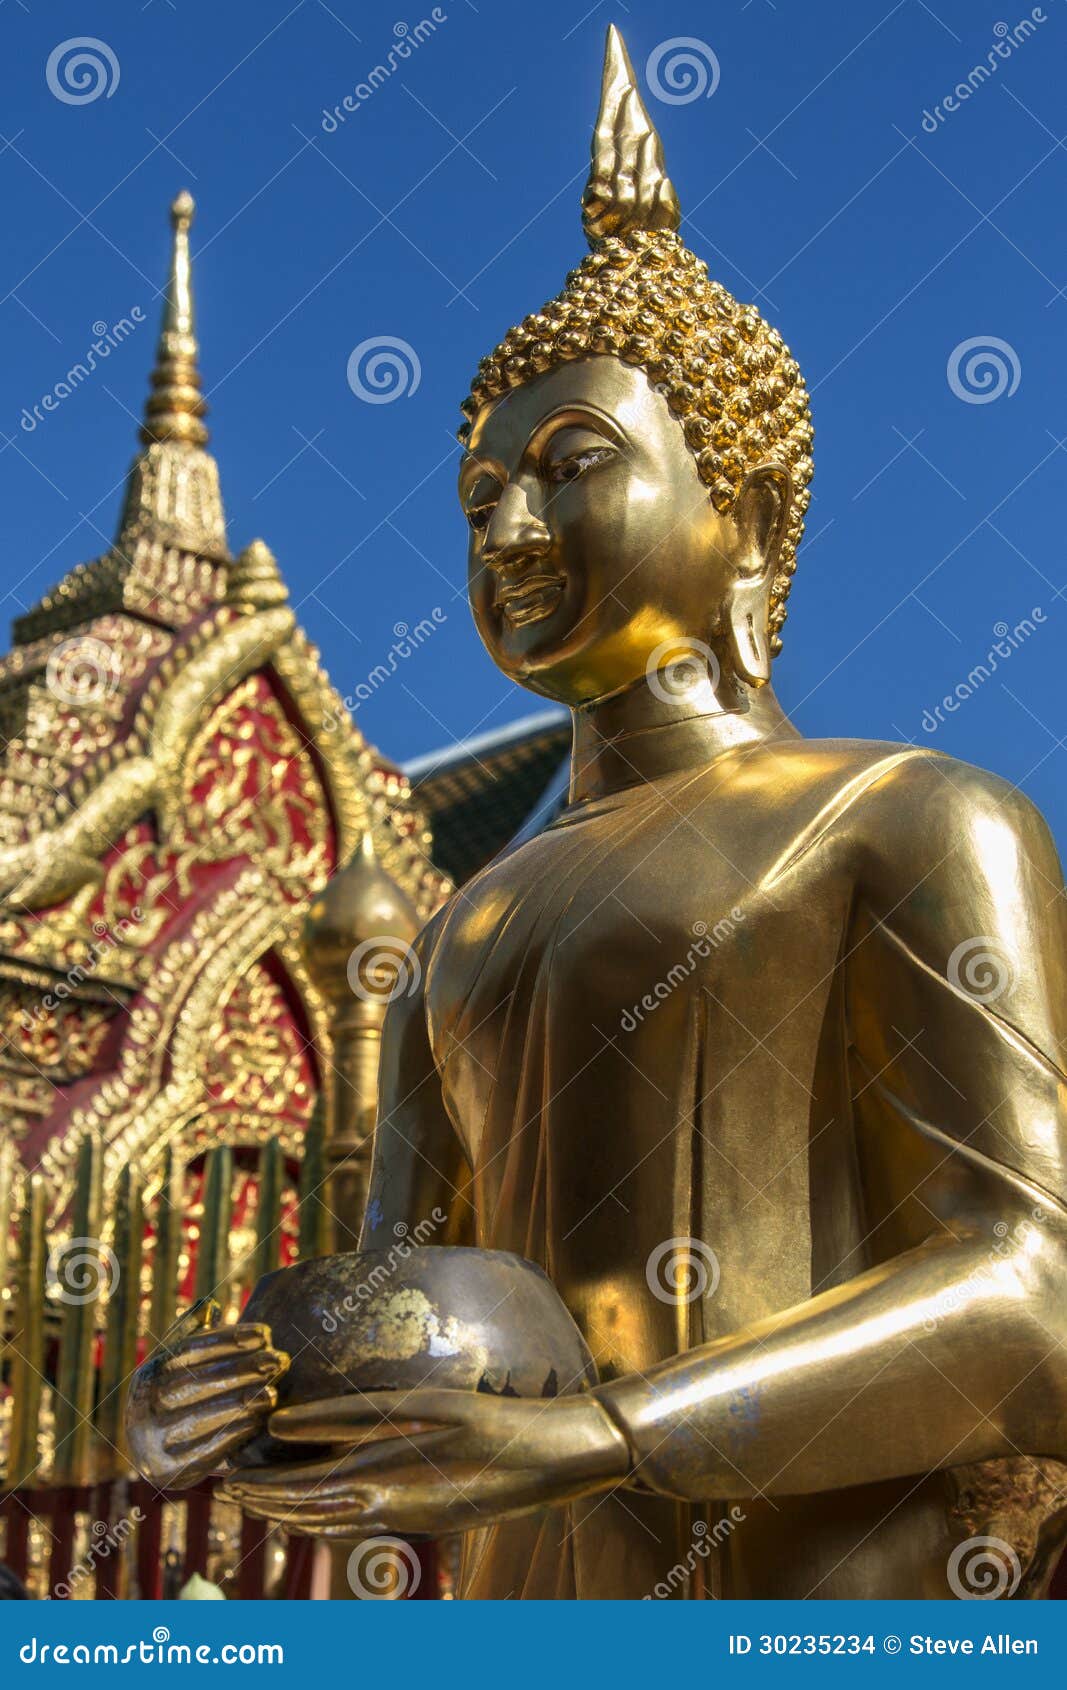 doi suthep buddhist temple - chiang mai - thailand